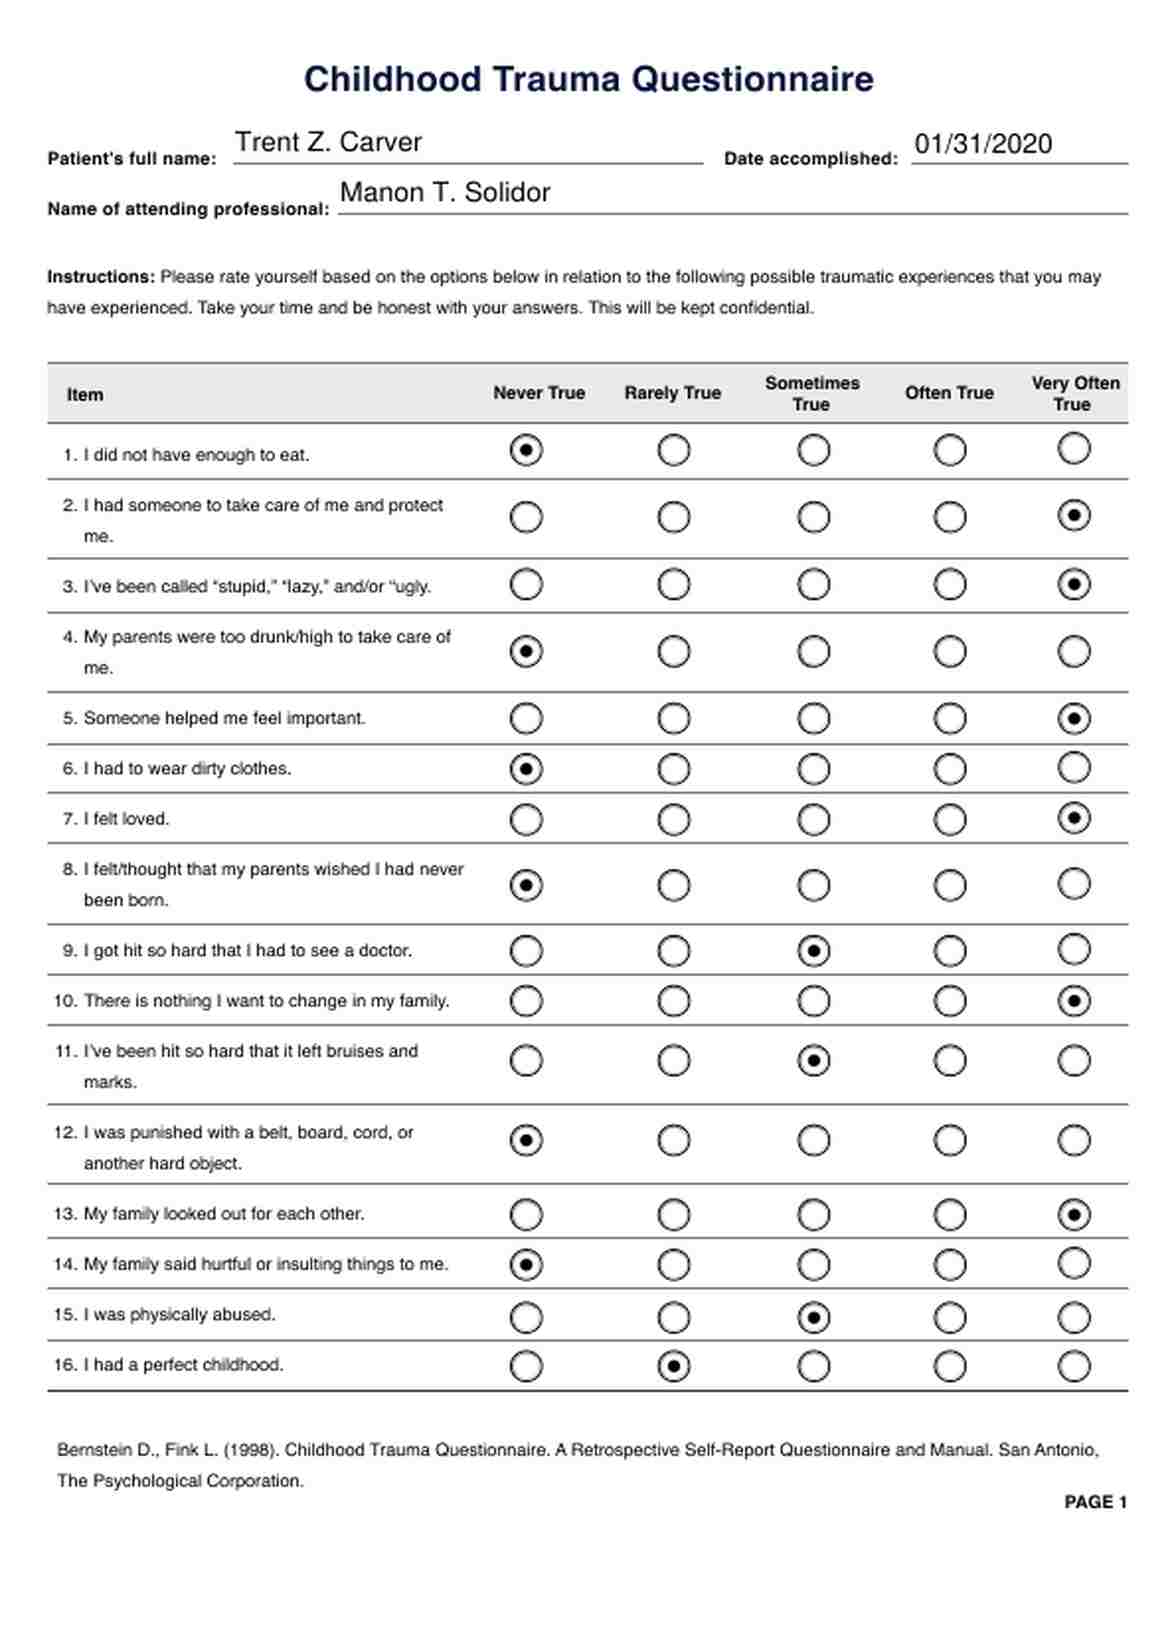 Childhood Trauma Questionnaire PDF Example